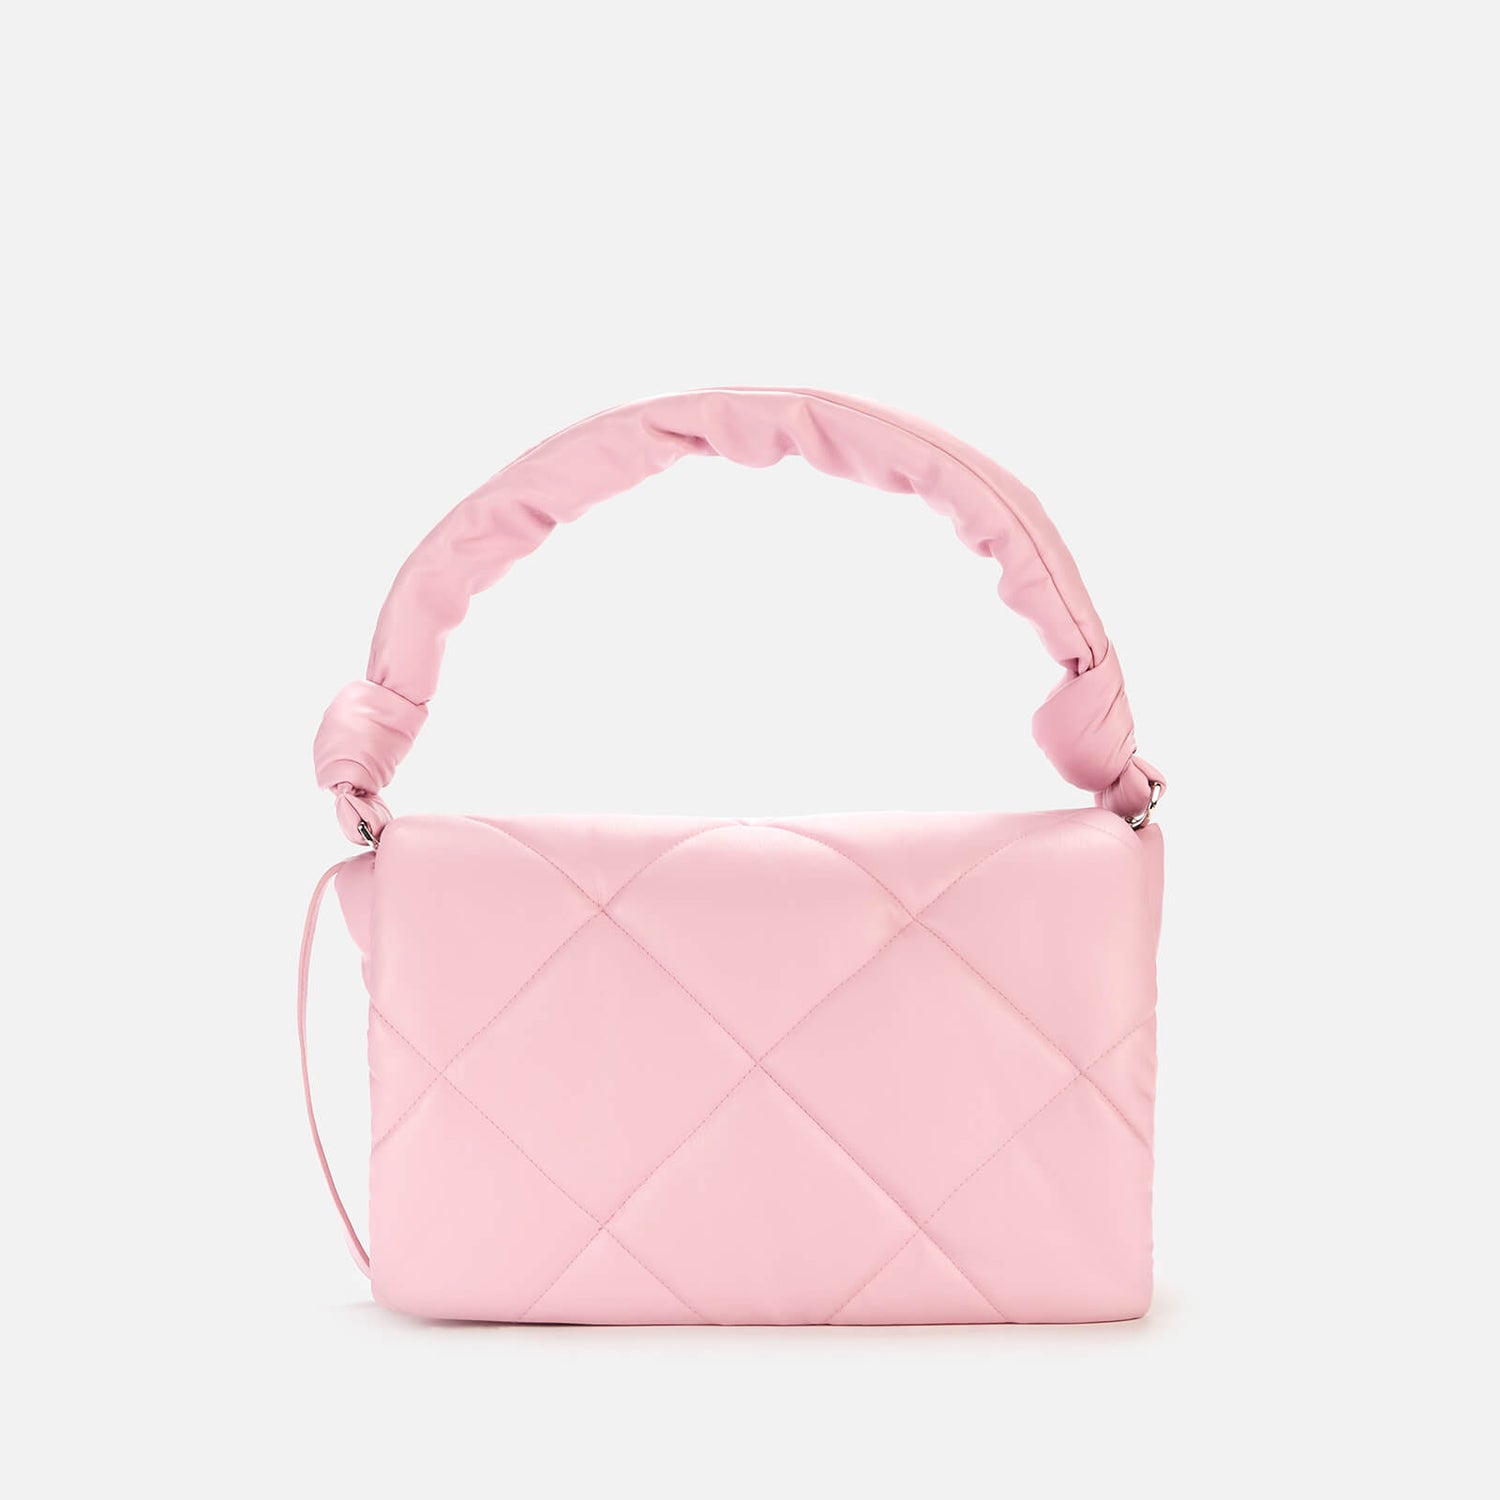 Stand Studio Women's Wanda Mini Bag - Bubblegum Pink